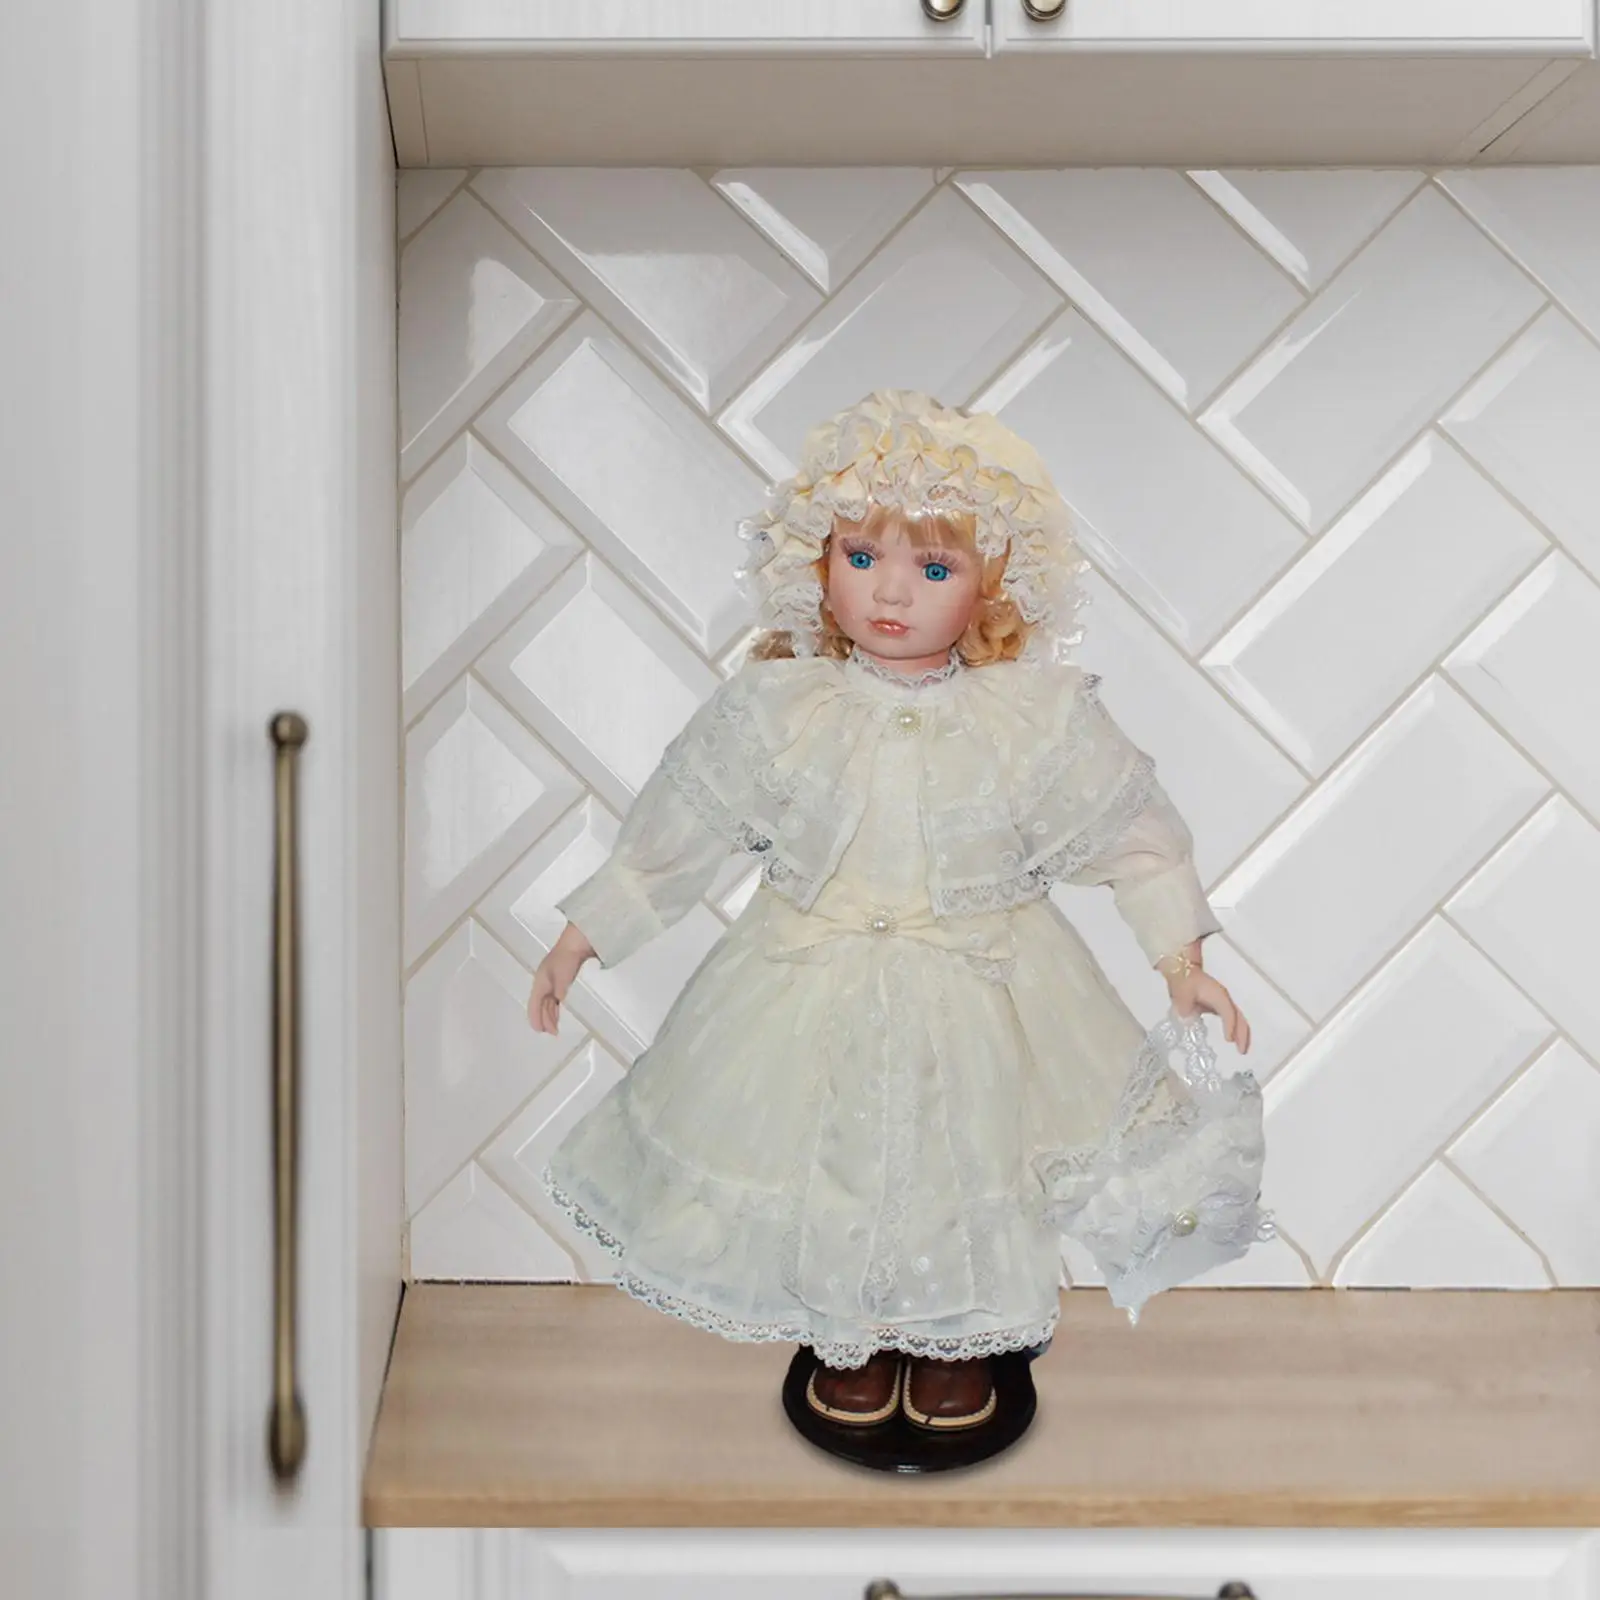 Long Hair Girl Doll Porcelain Dolls for Preschool Activity Birthday Present